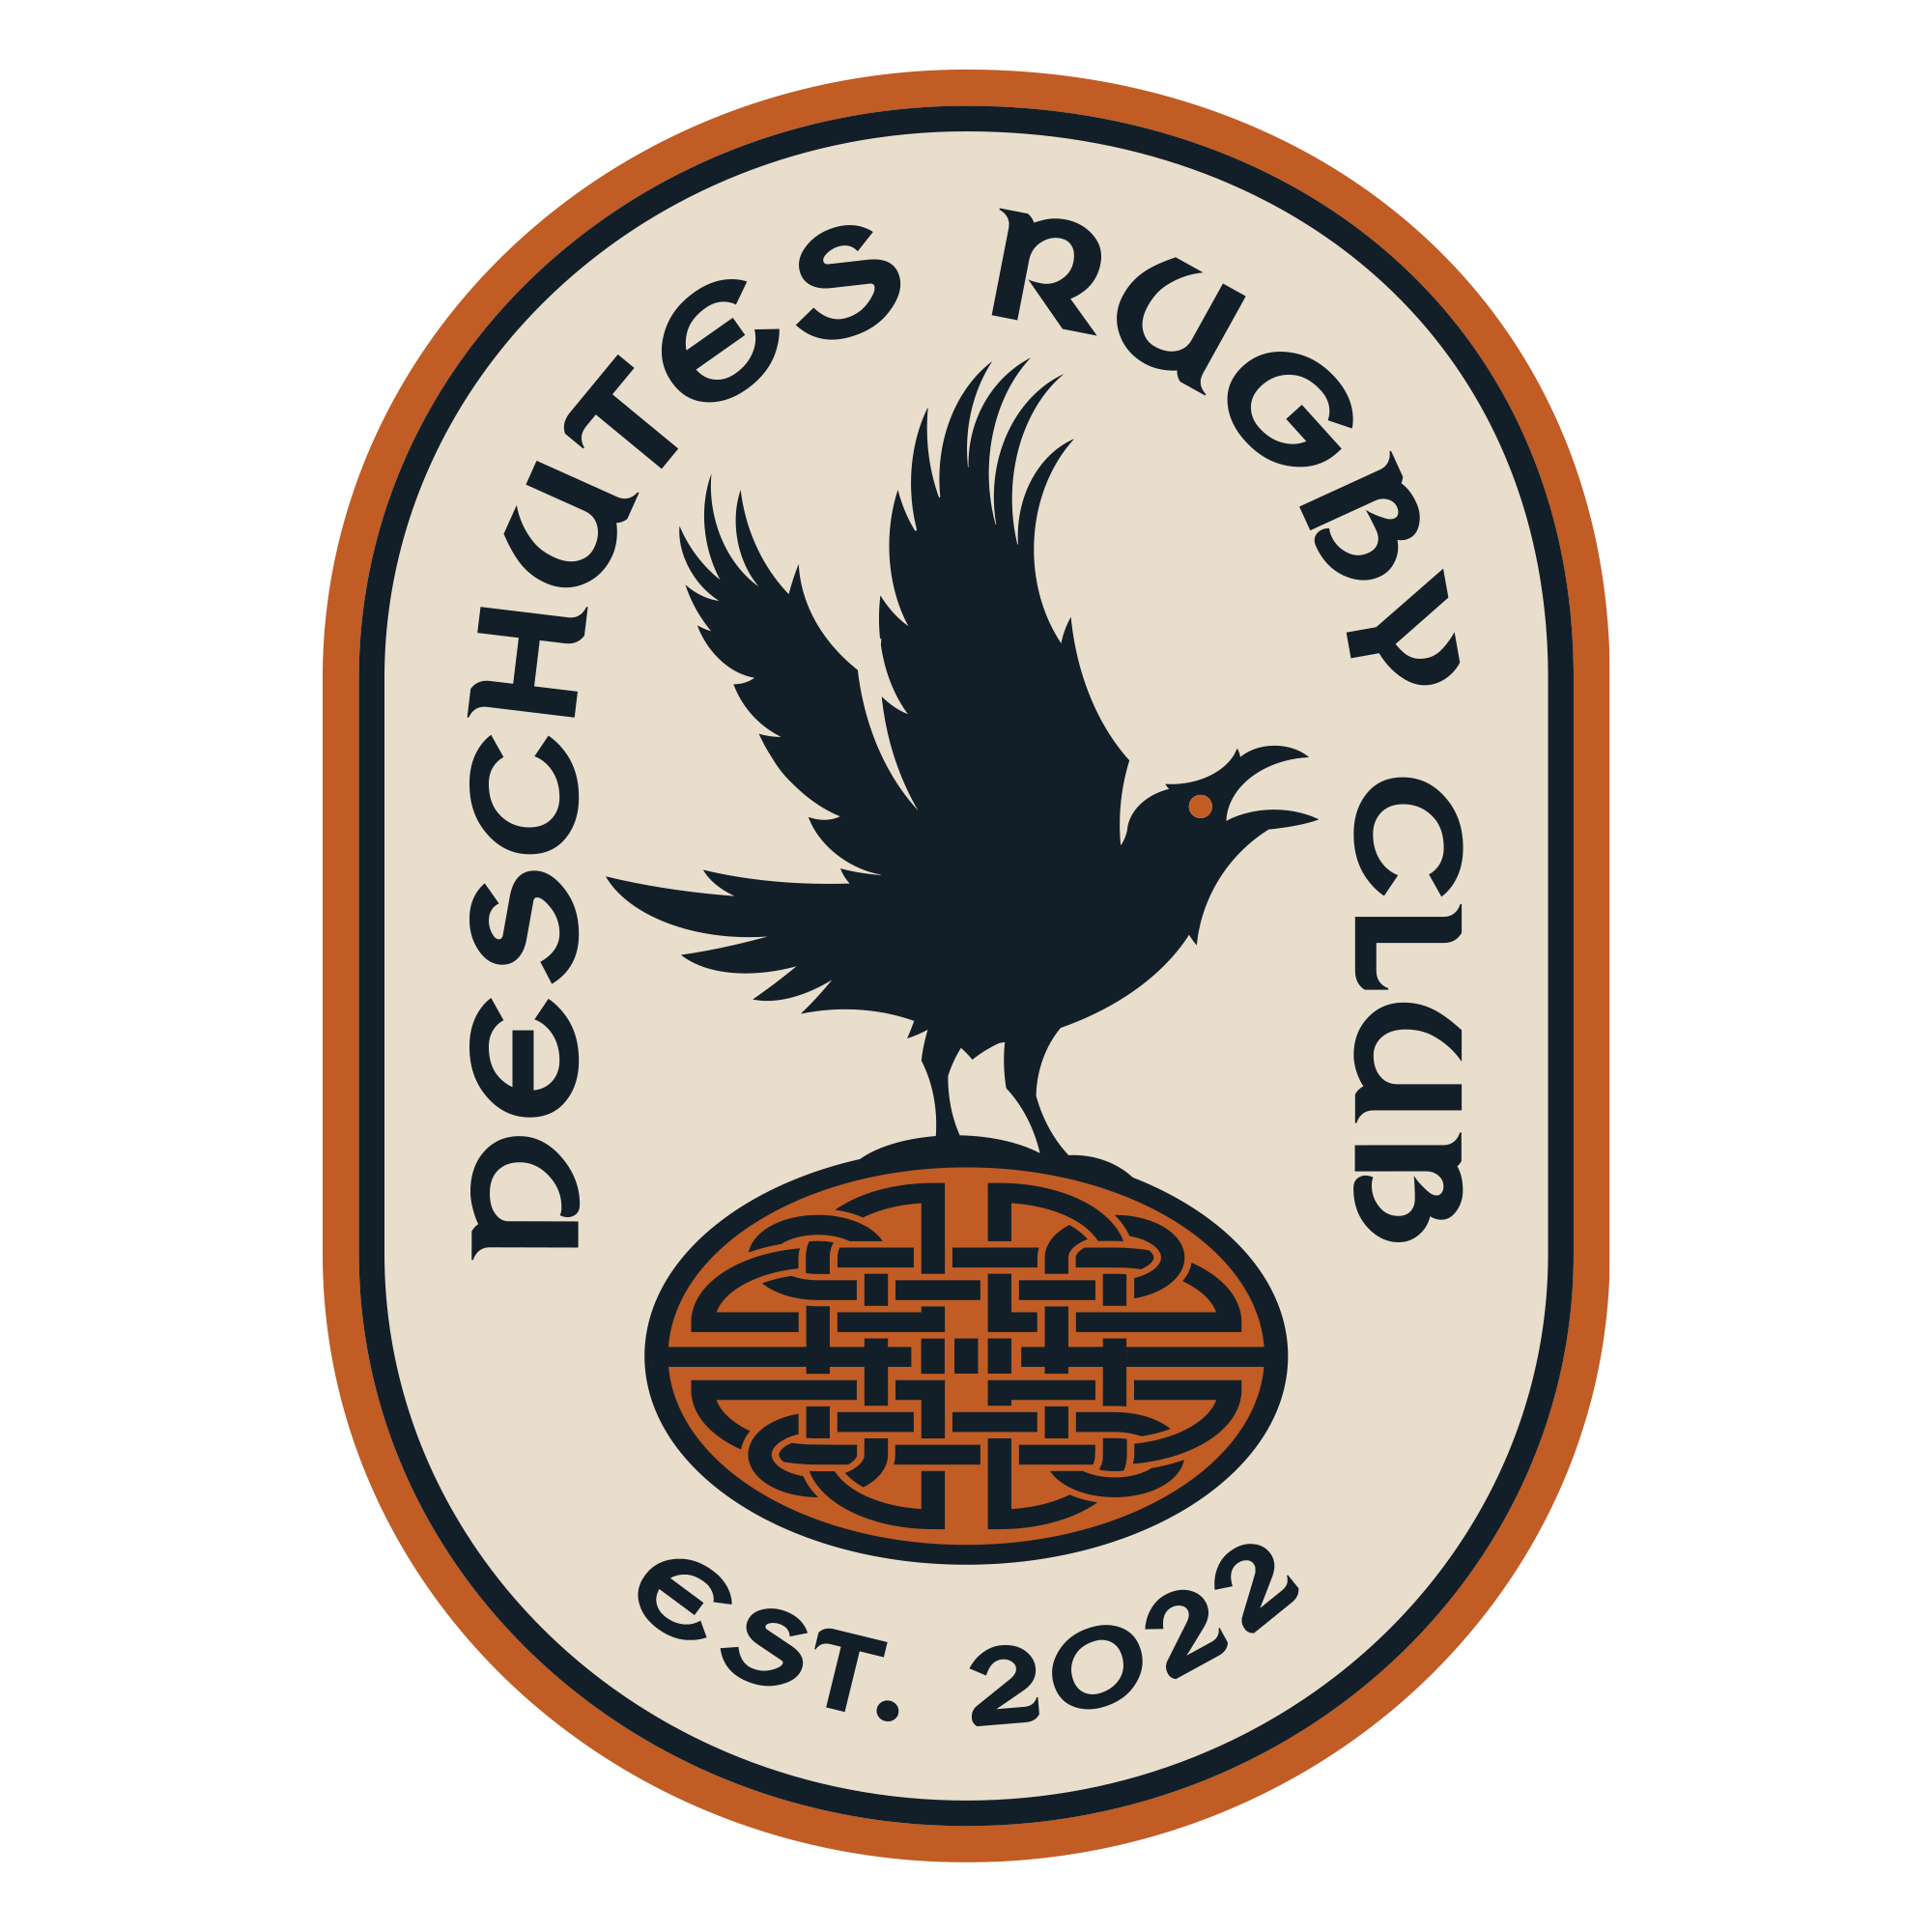 Deschutes Rugby Club logo